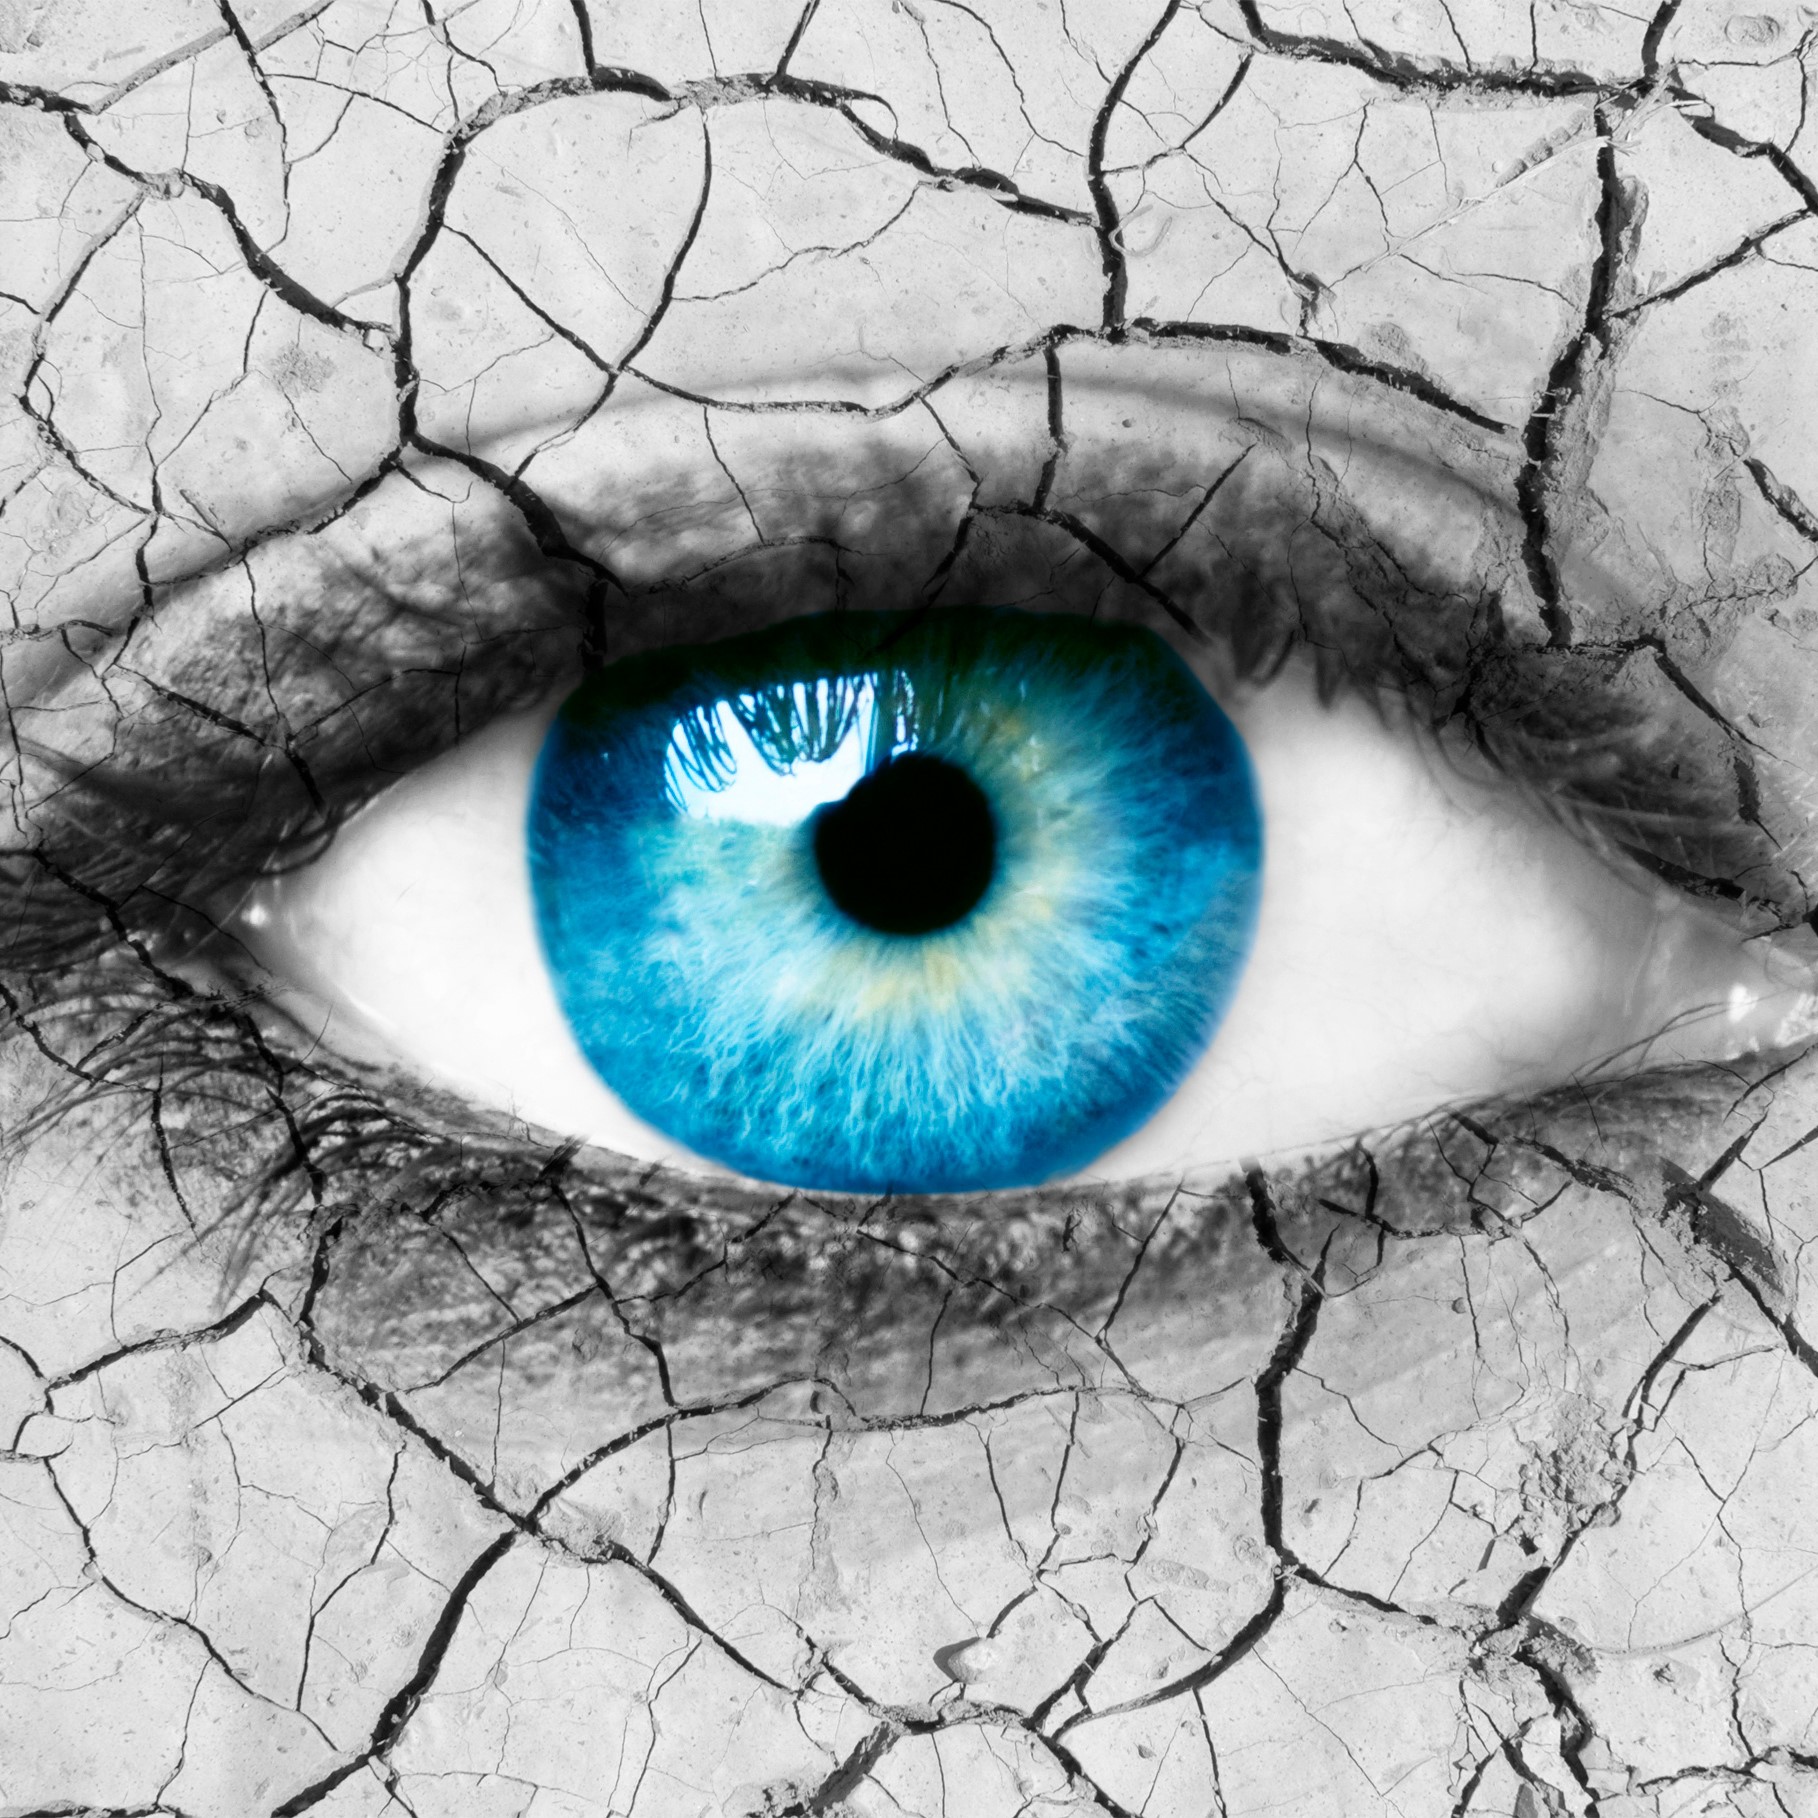 Dry eye image with blue eye